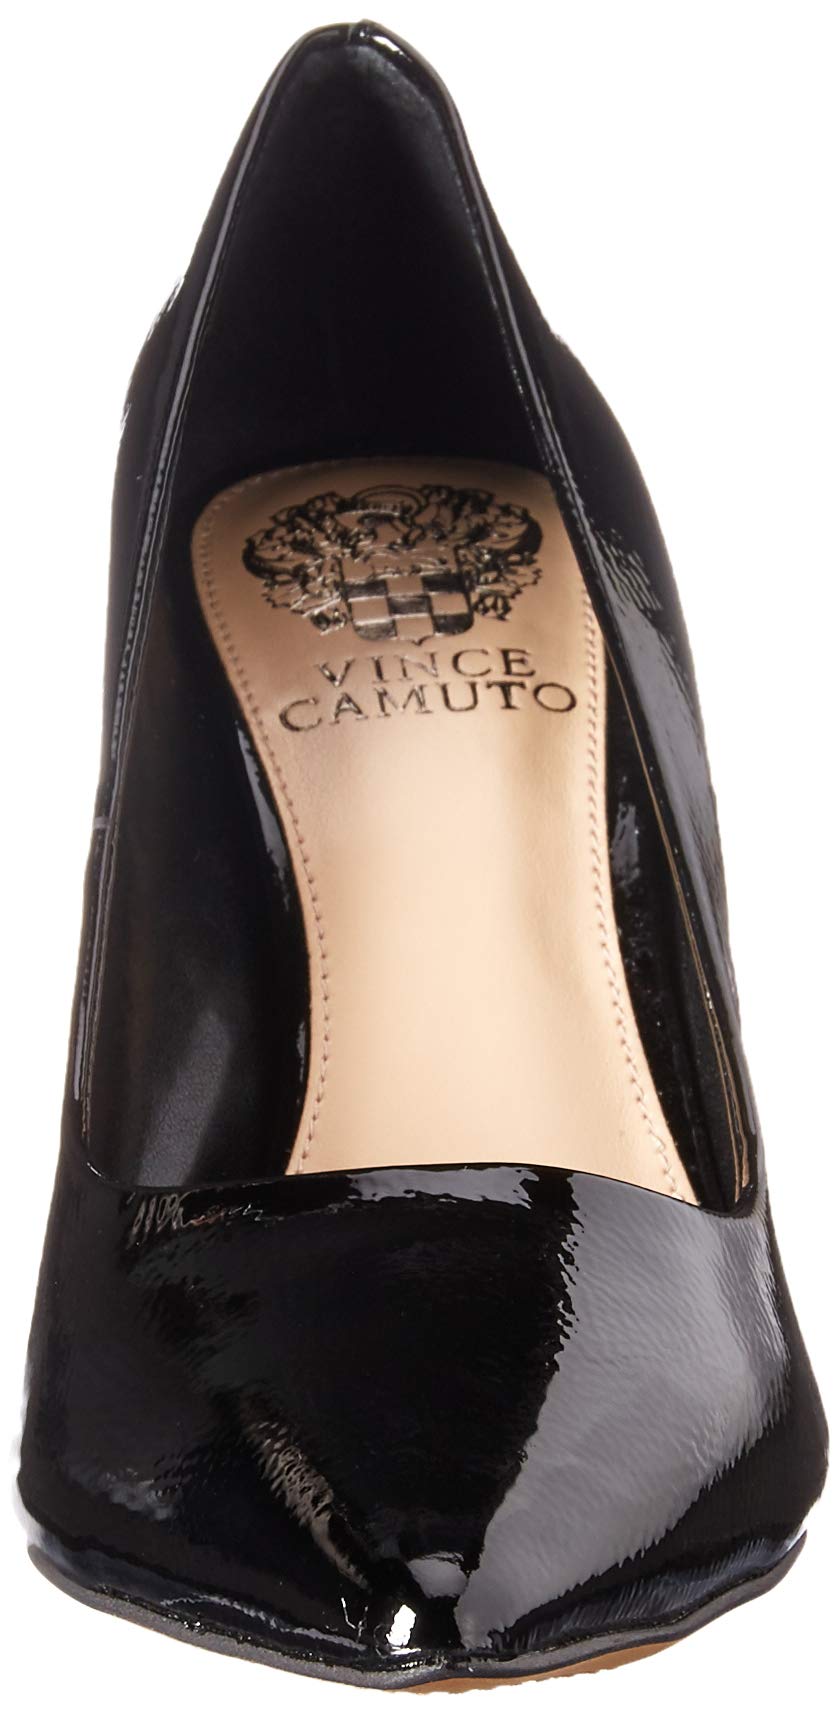 Vince Camuto Women's Footwear Unisex-Adult Savilla Pump